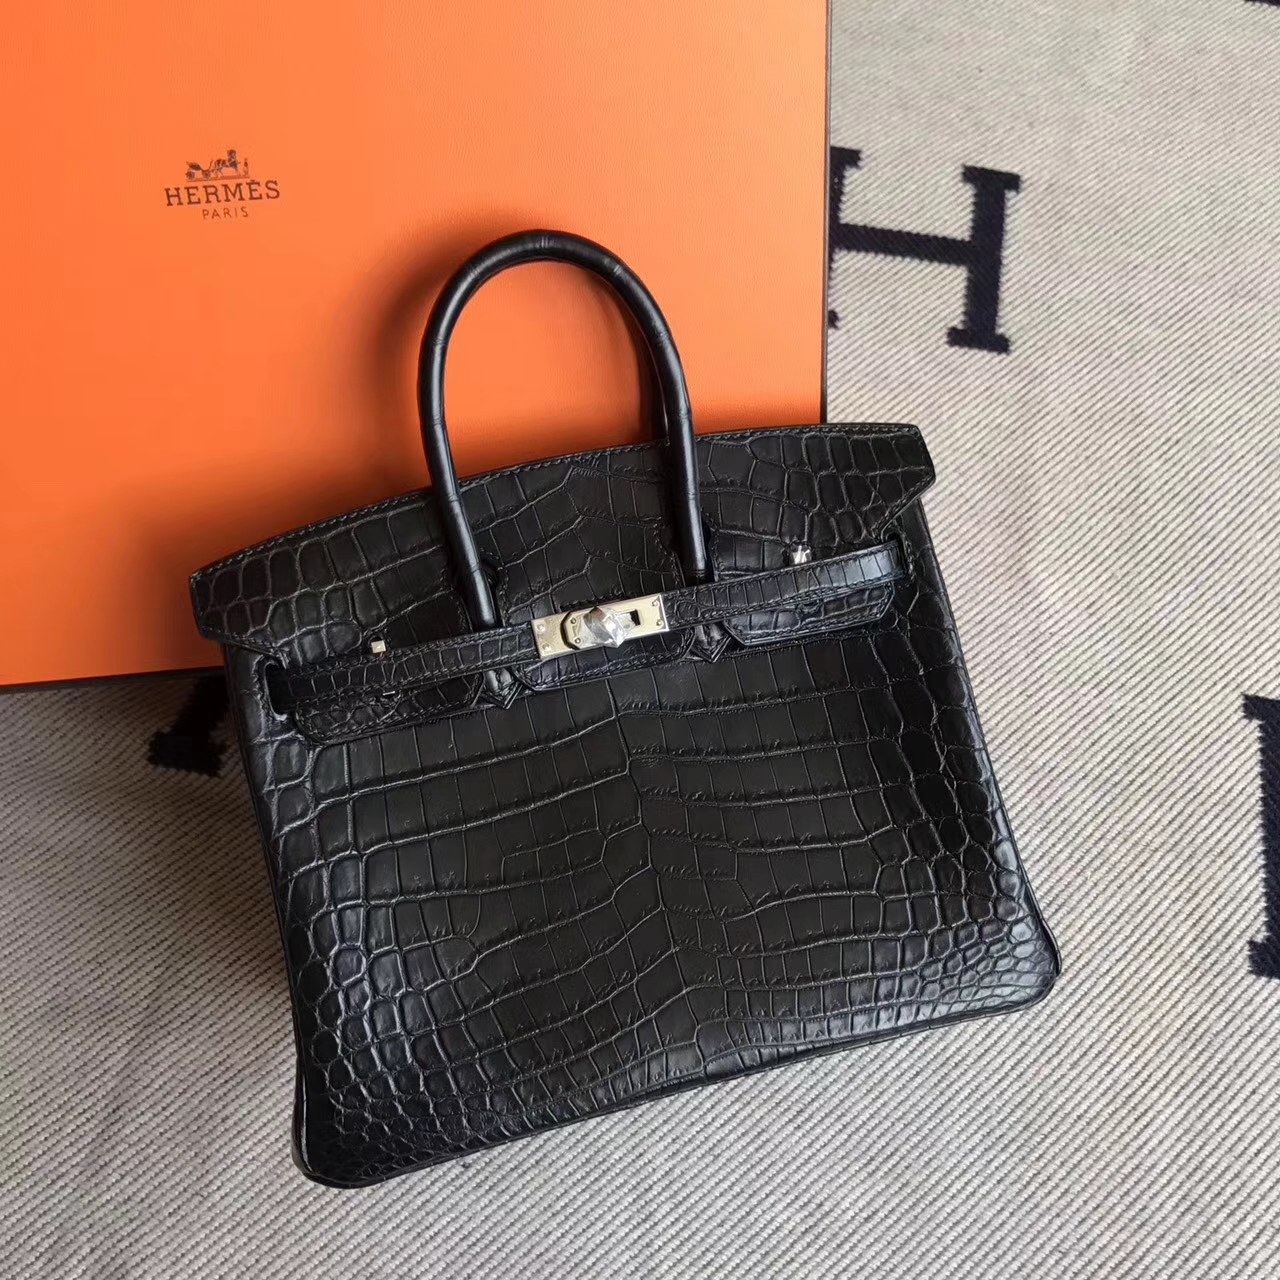 Wholesale Hermes Classic Birkin Bag in CK89 Black Crocodile Matt Leather